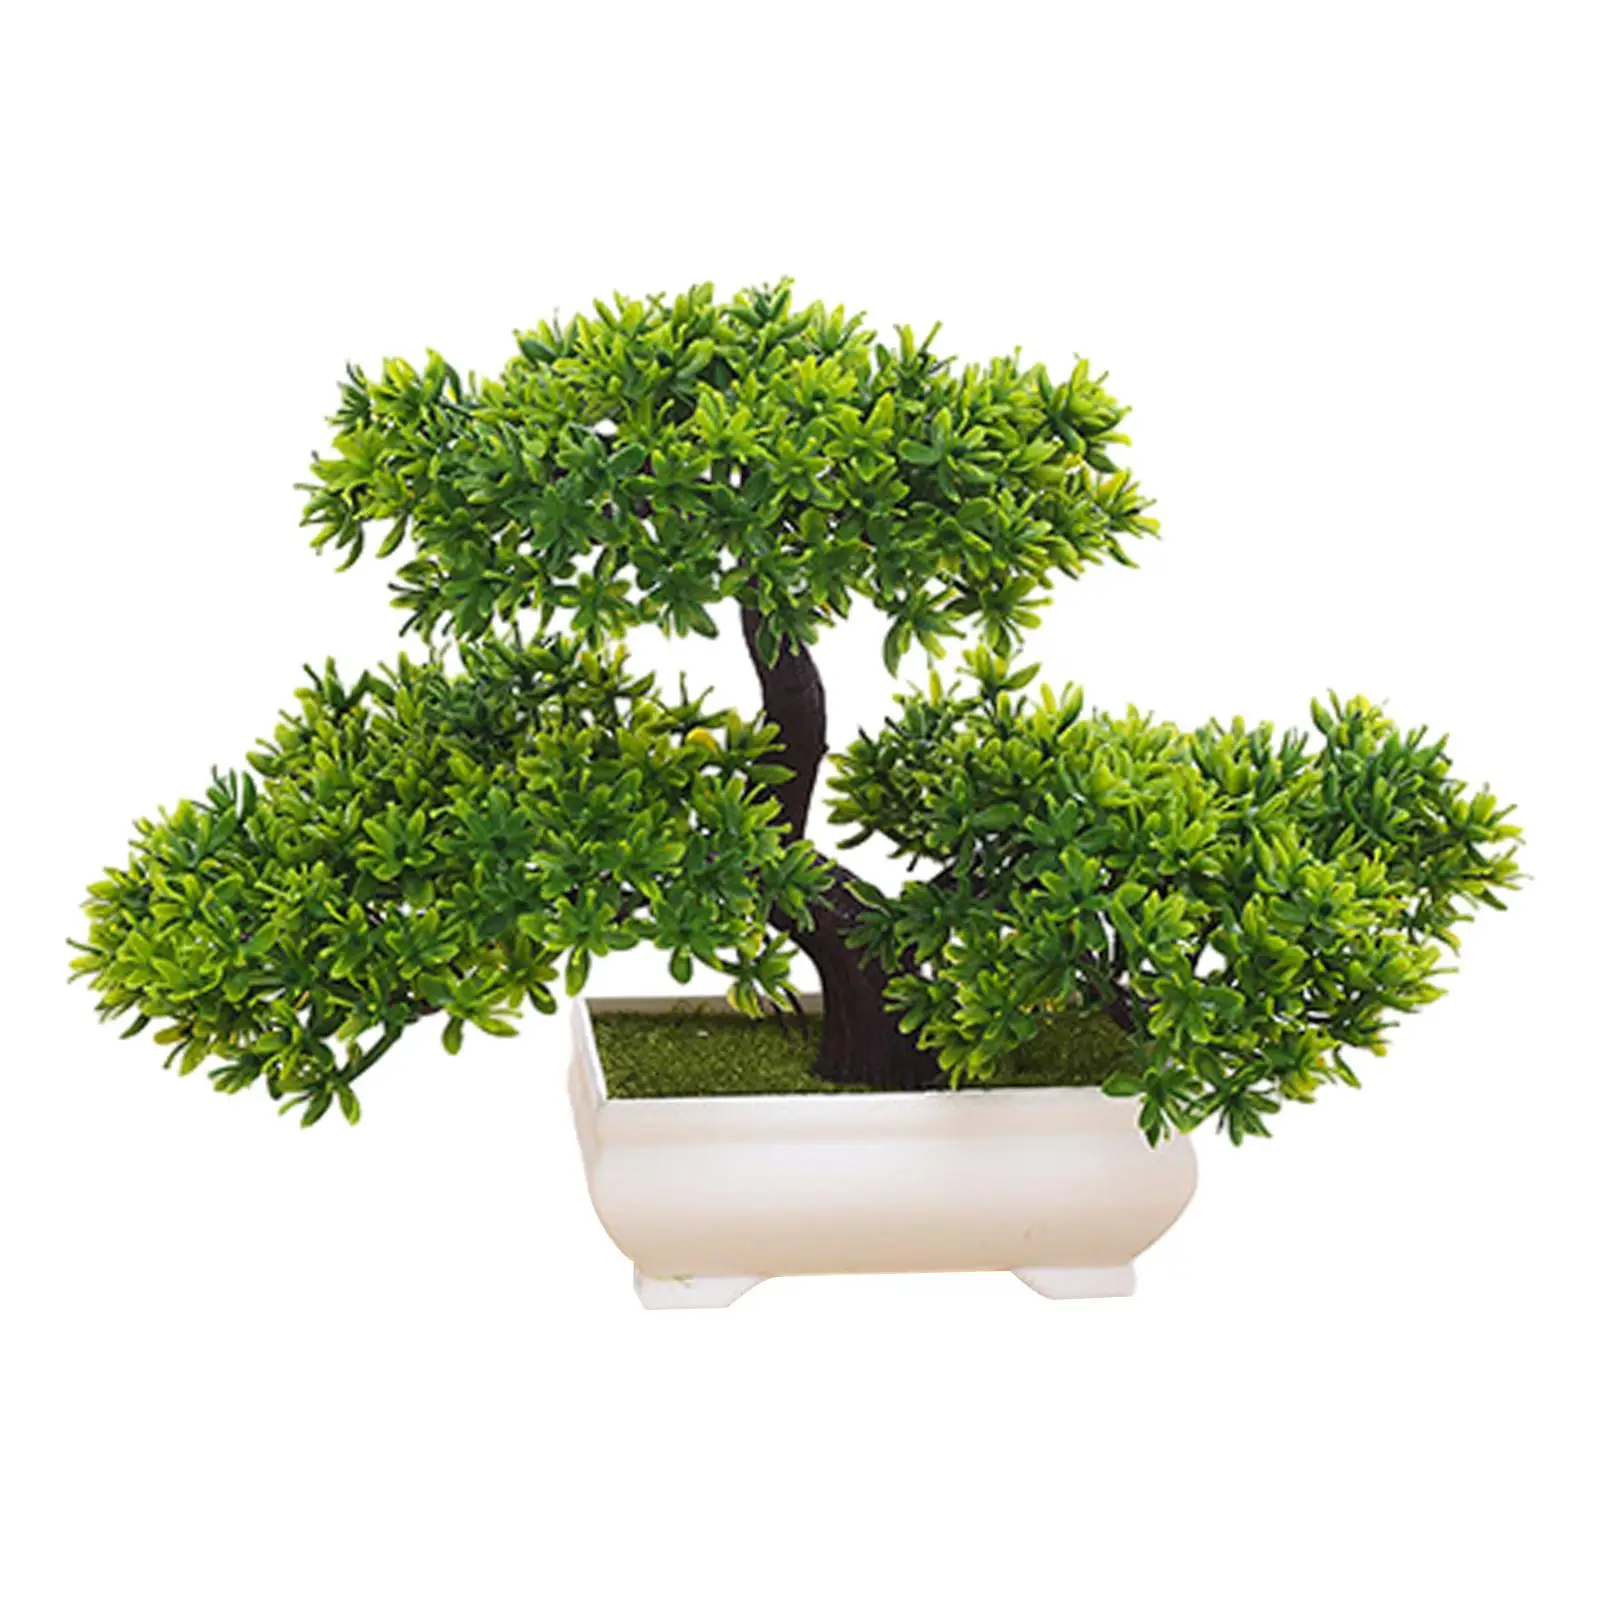 Artificial Bonsai Tree Zen Centerpiece Home Decor Simulation Table Faux Plants for Living Room Office Bedroom Bathroom